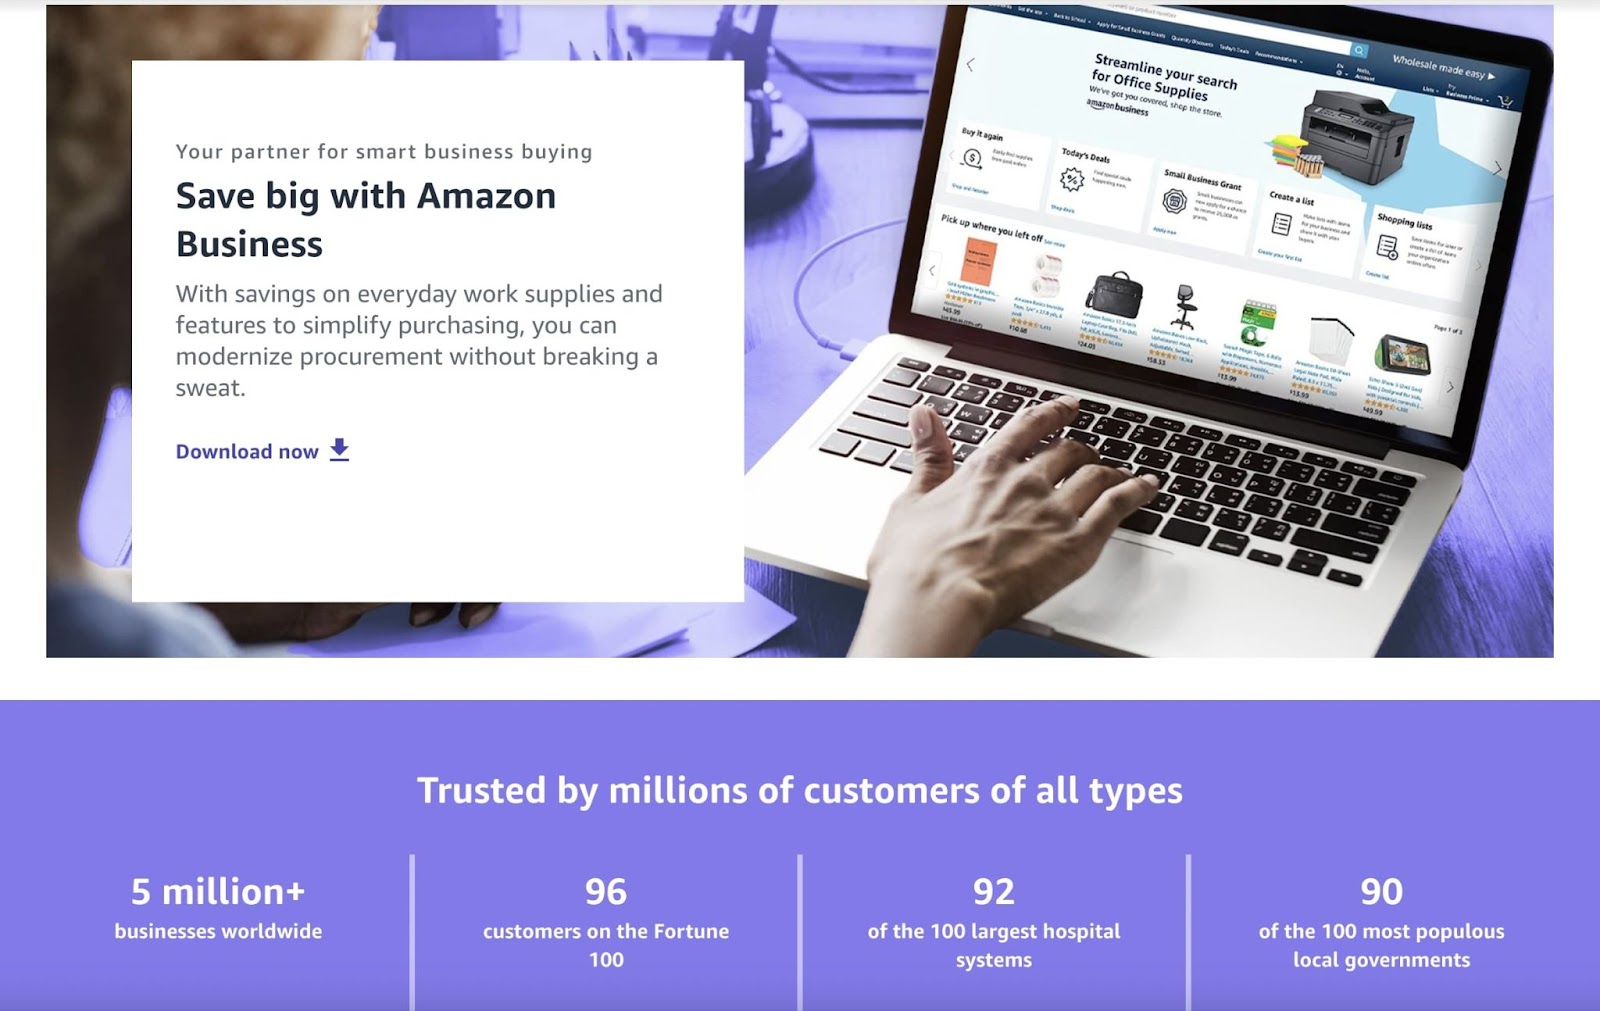 Amazon's ecommerce B2B website